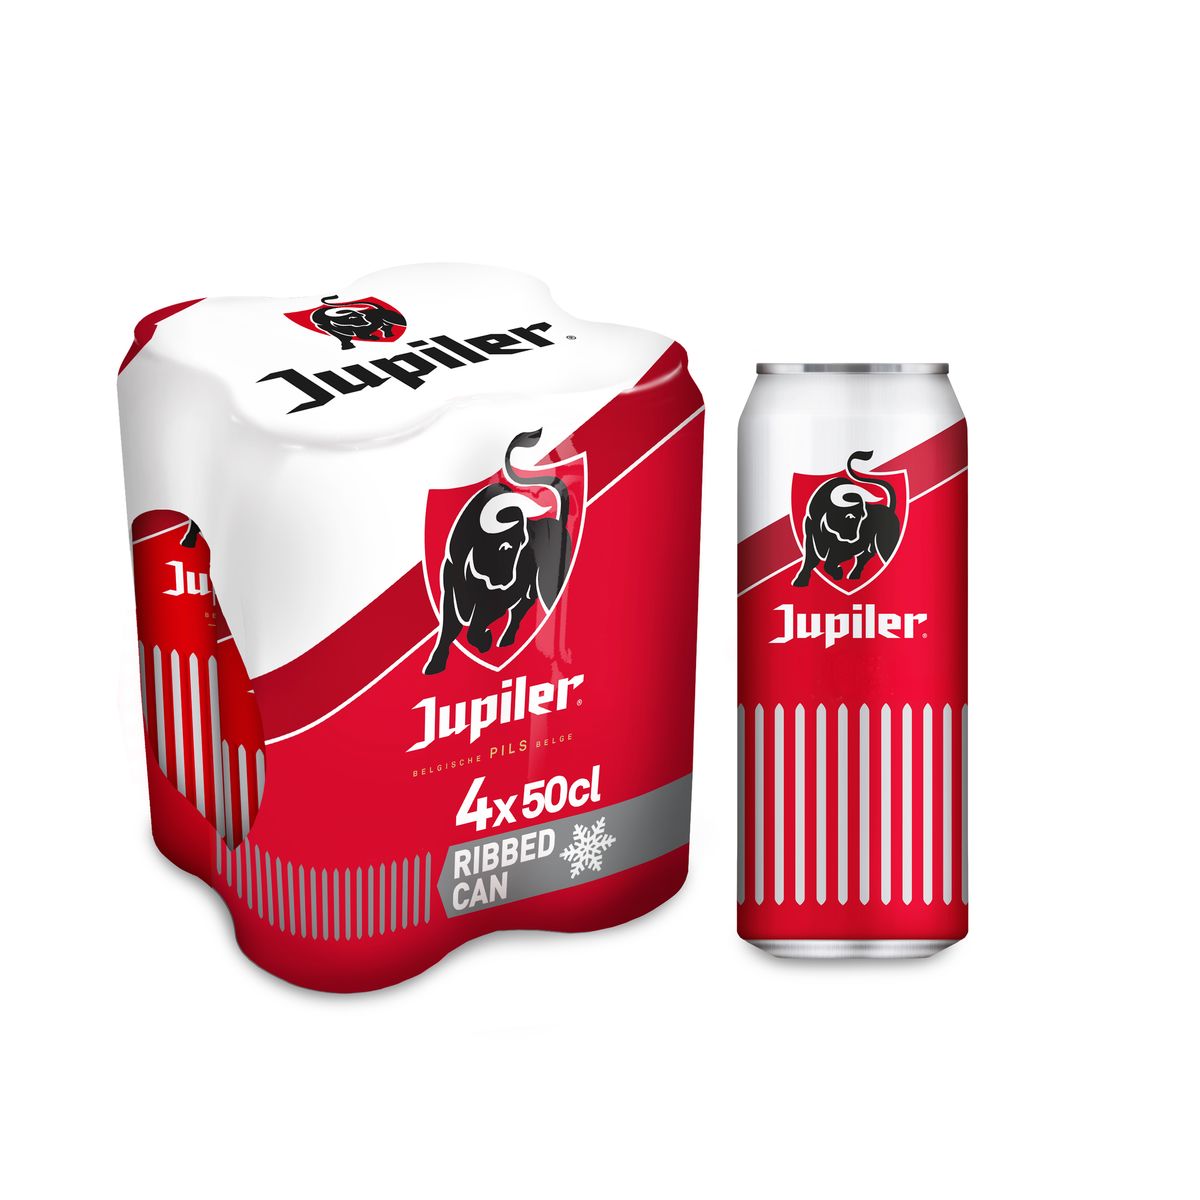 Jupiler Blond Bier Pils 5.2% Alc 4 x 50 cl Blikken Cold Grip